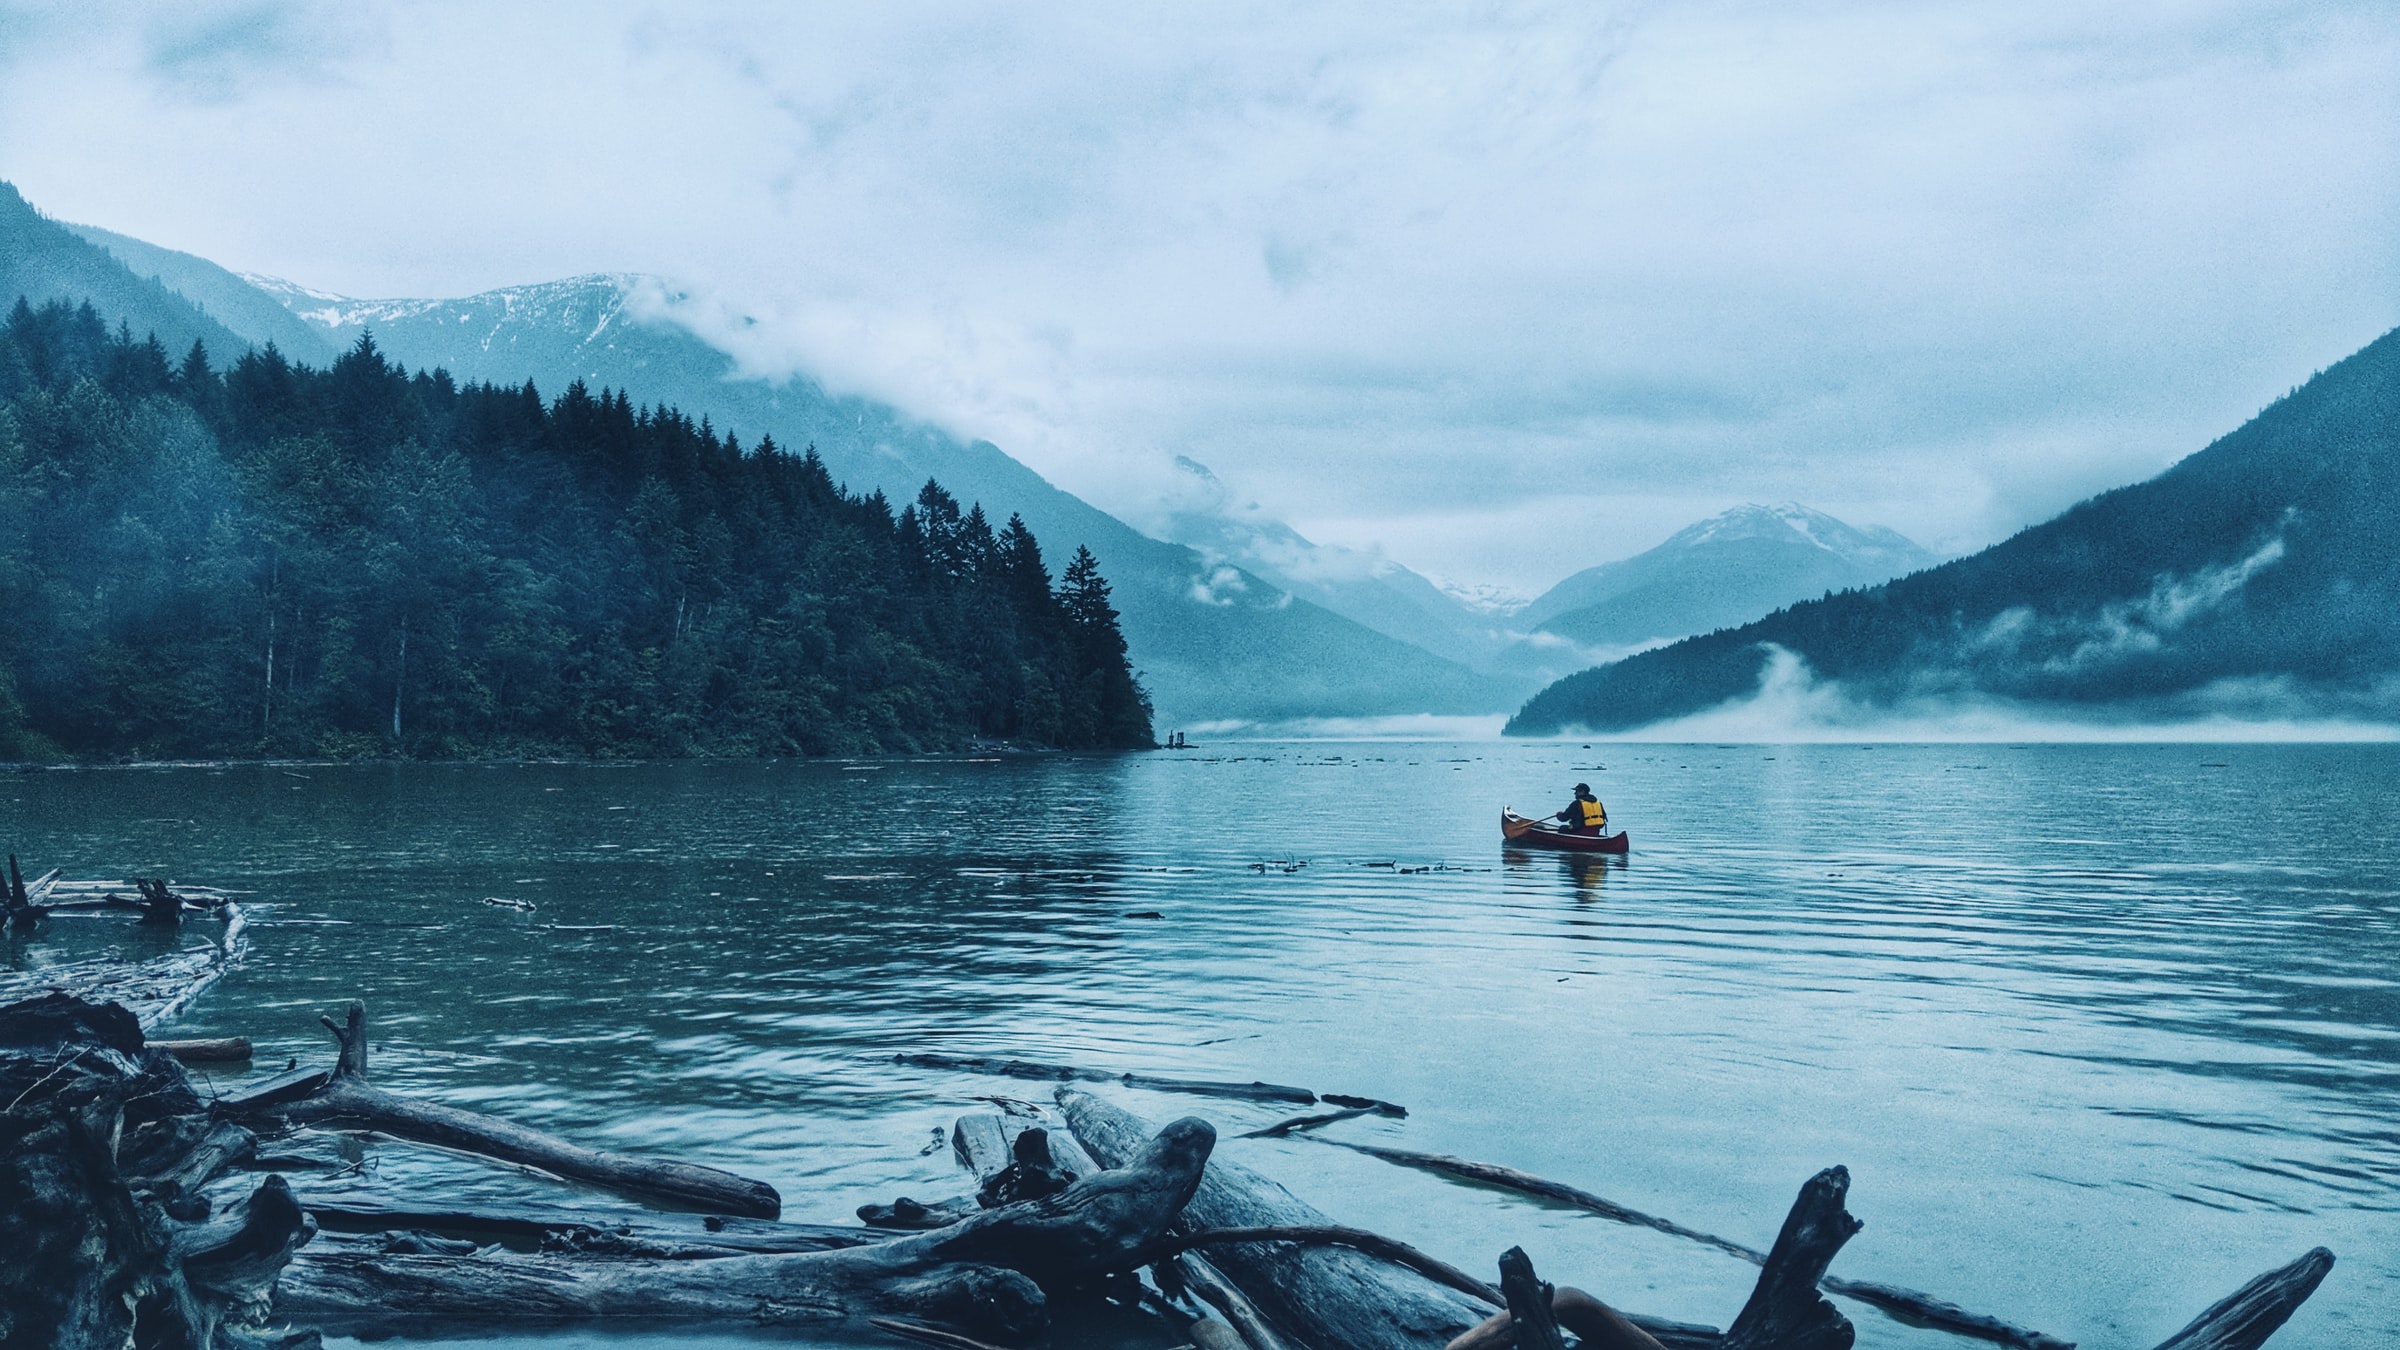 Lillooet lake, British Columbia